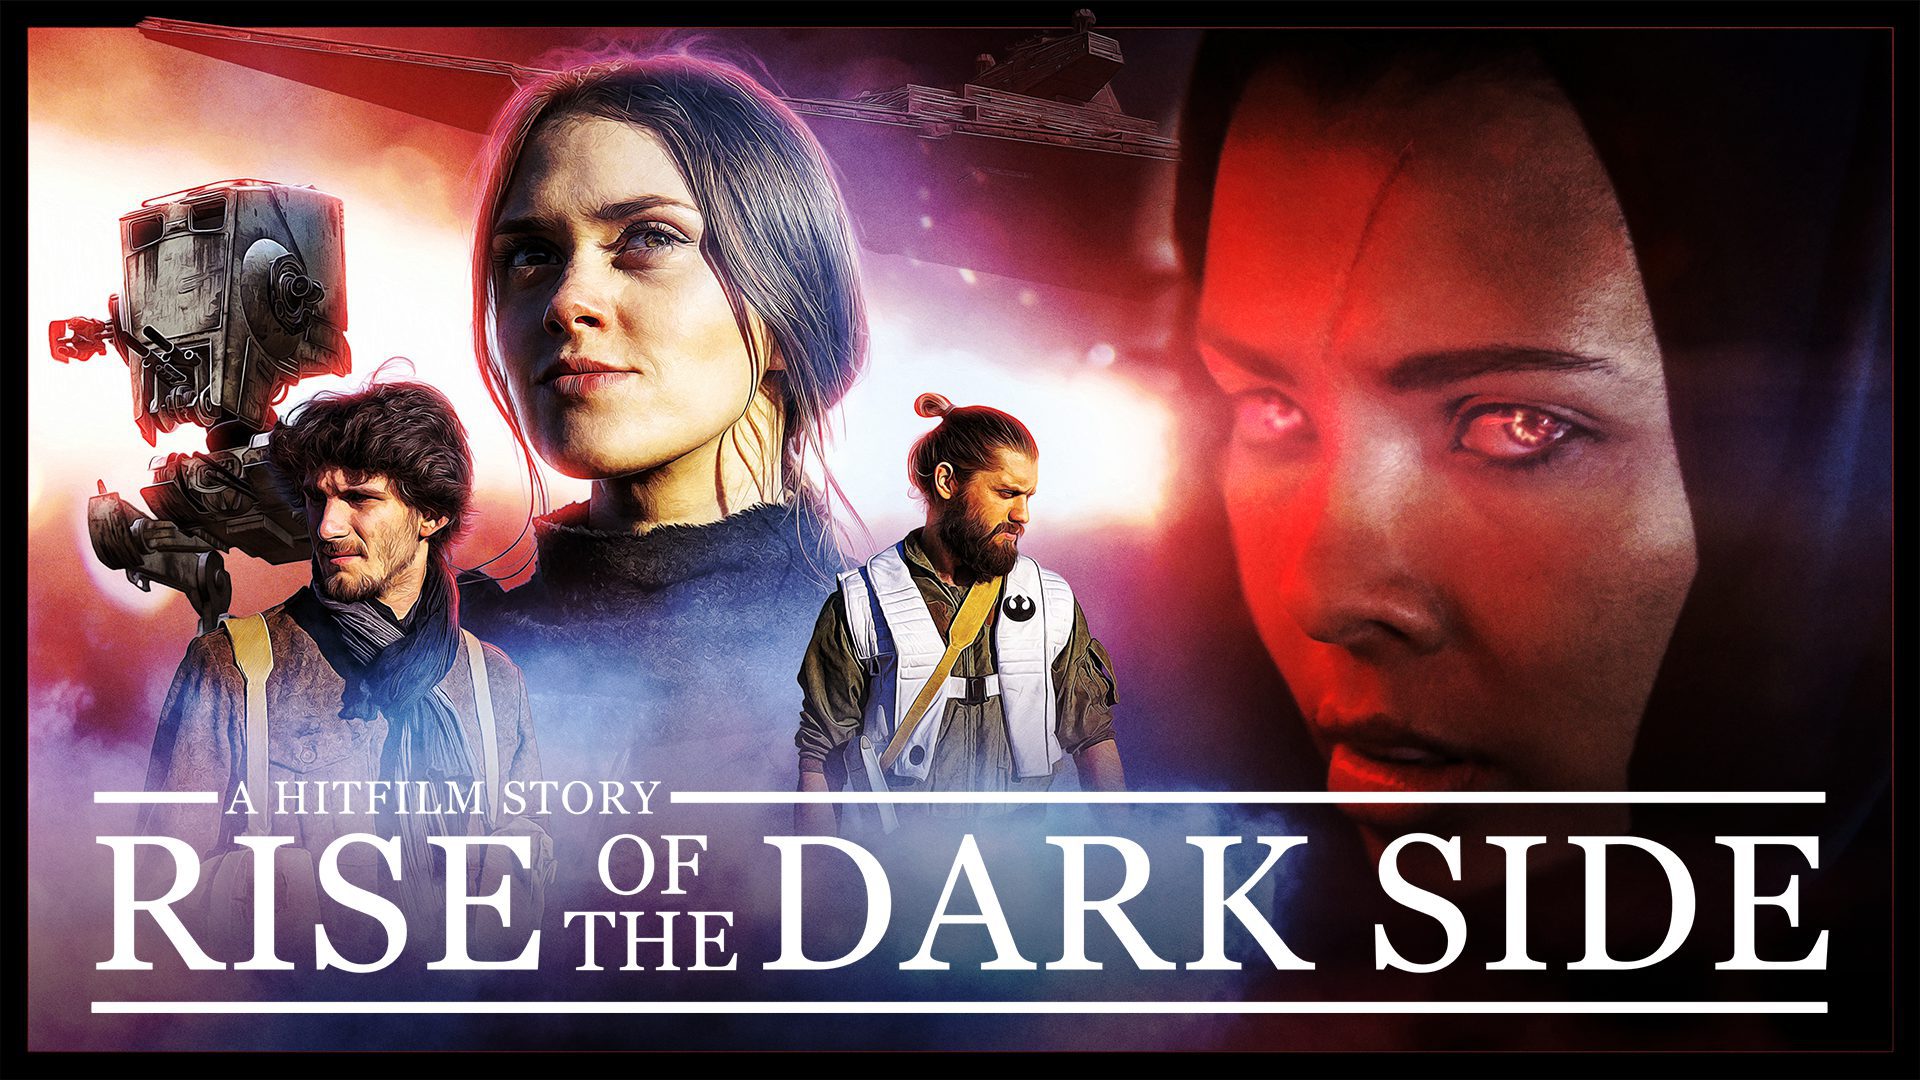 Rise of the Dark Side Star Wars-inspired fan film trailer thumbnail